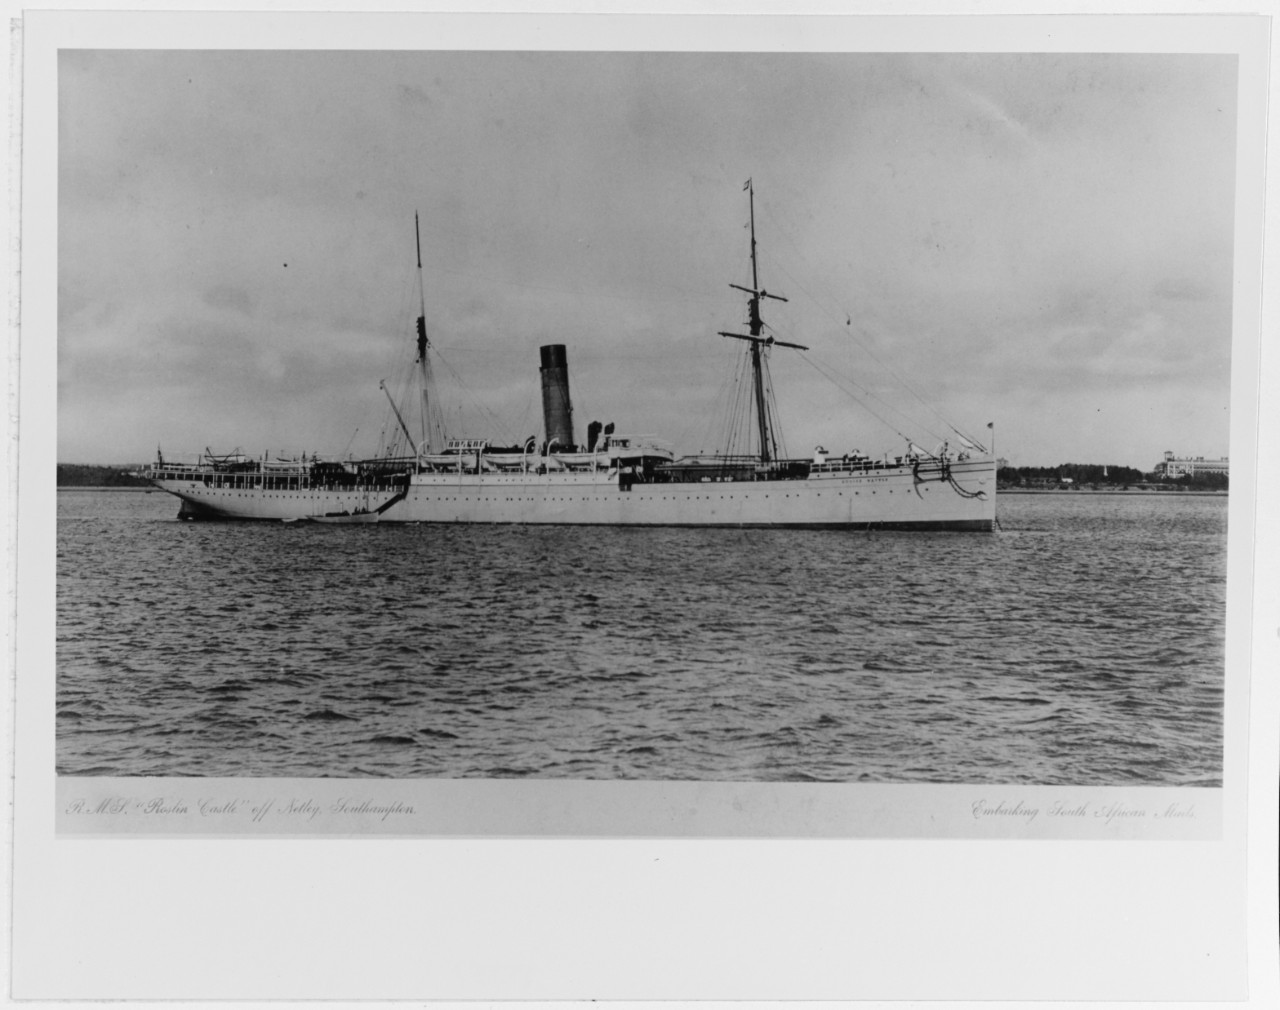 ROSLIN CASTLE (British merchant ship, circa 1890)